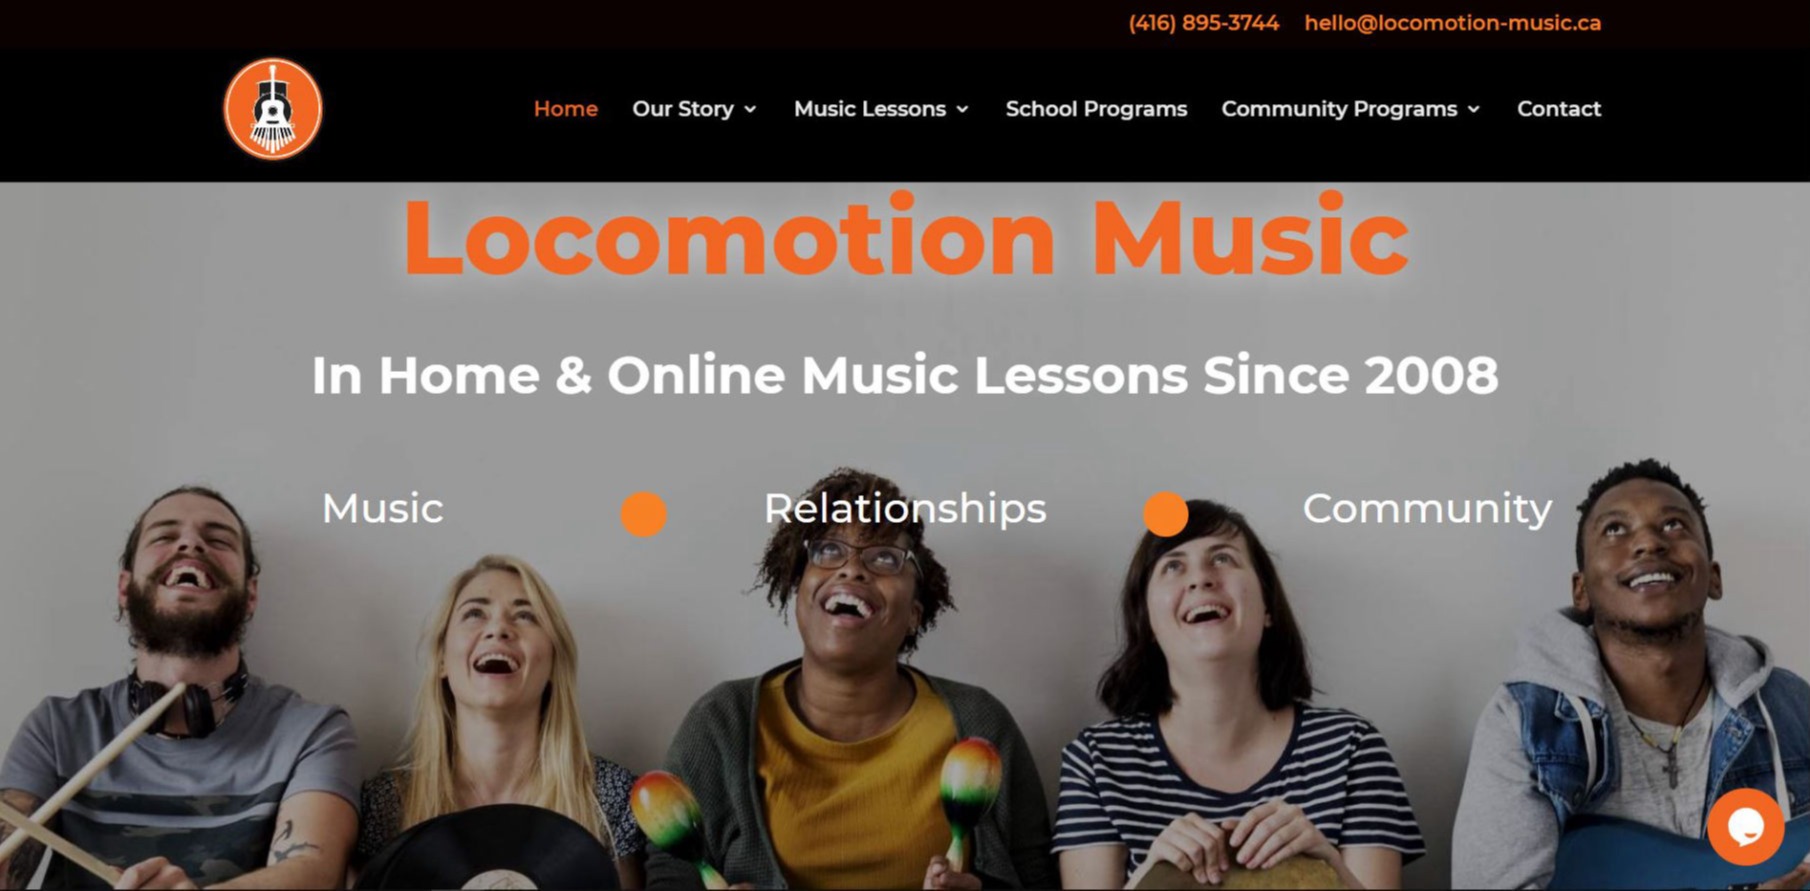 Locomotion Music Digital Marketing by Joshi Digital